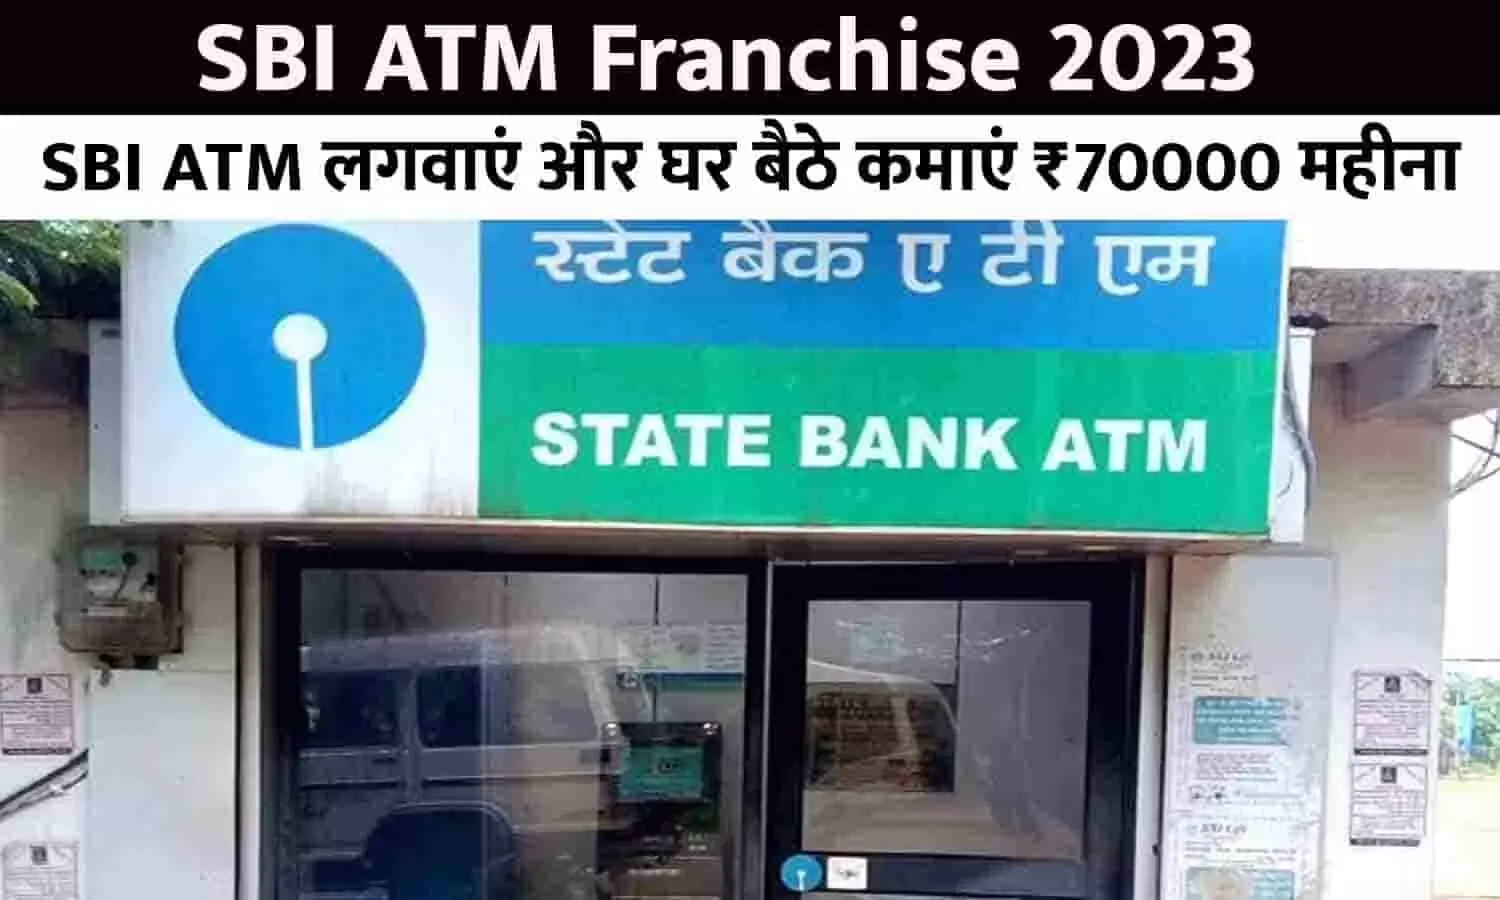 SBI Bank ATM Franchise Kaise Le